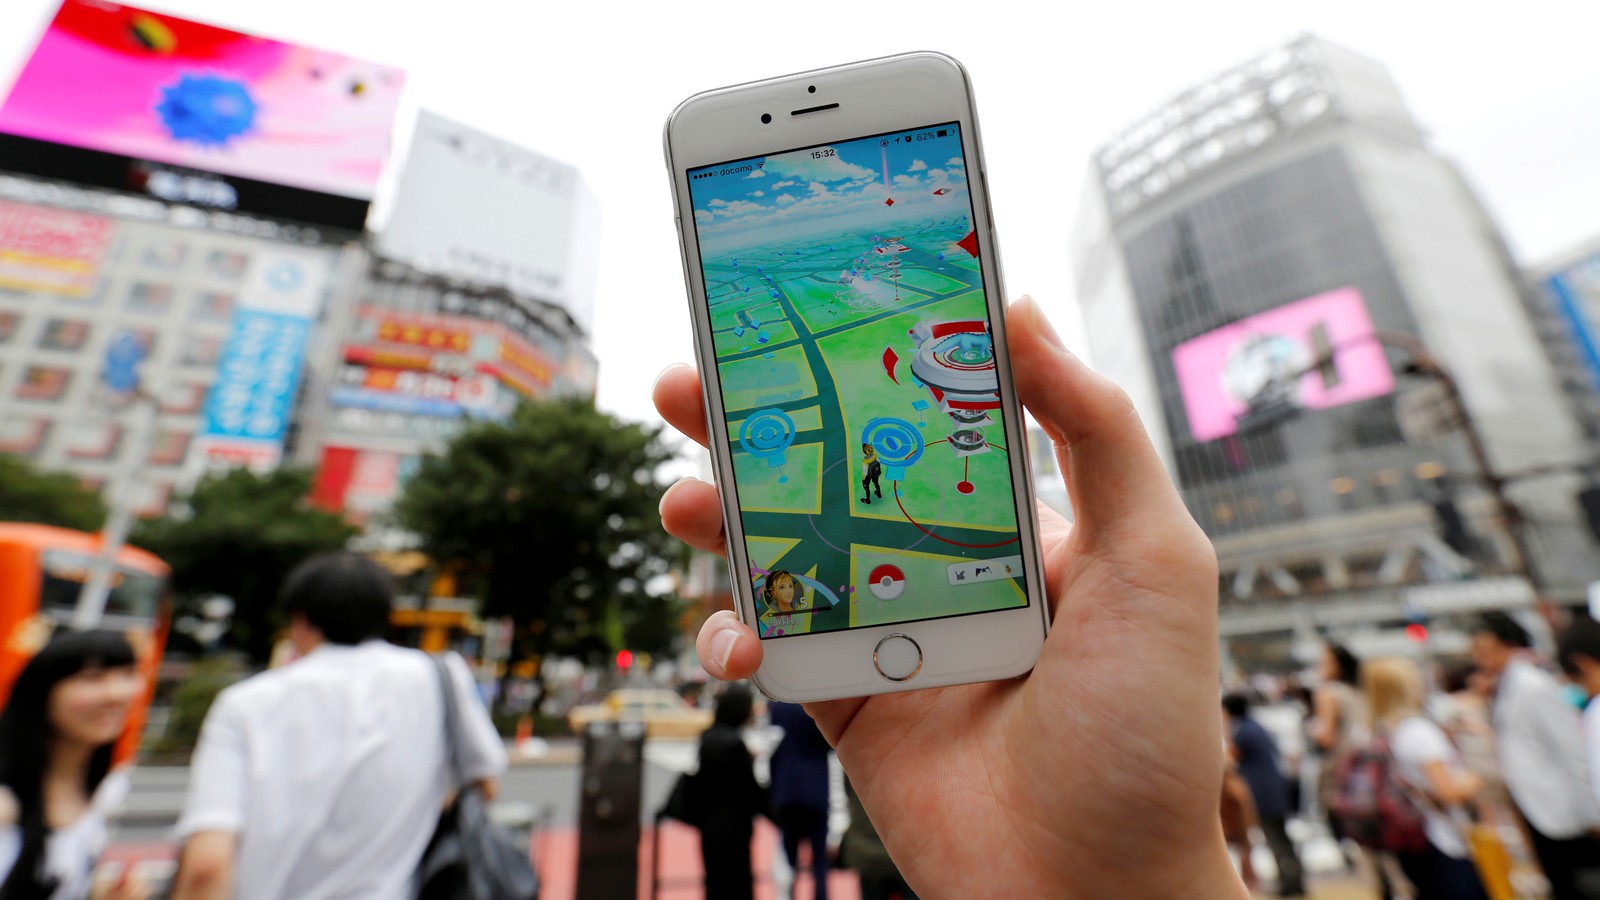 Pokémon Go Will Make You Crave Augmented Reality